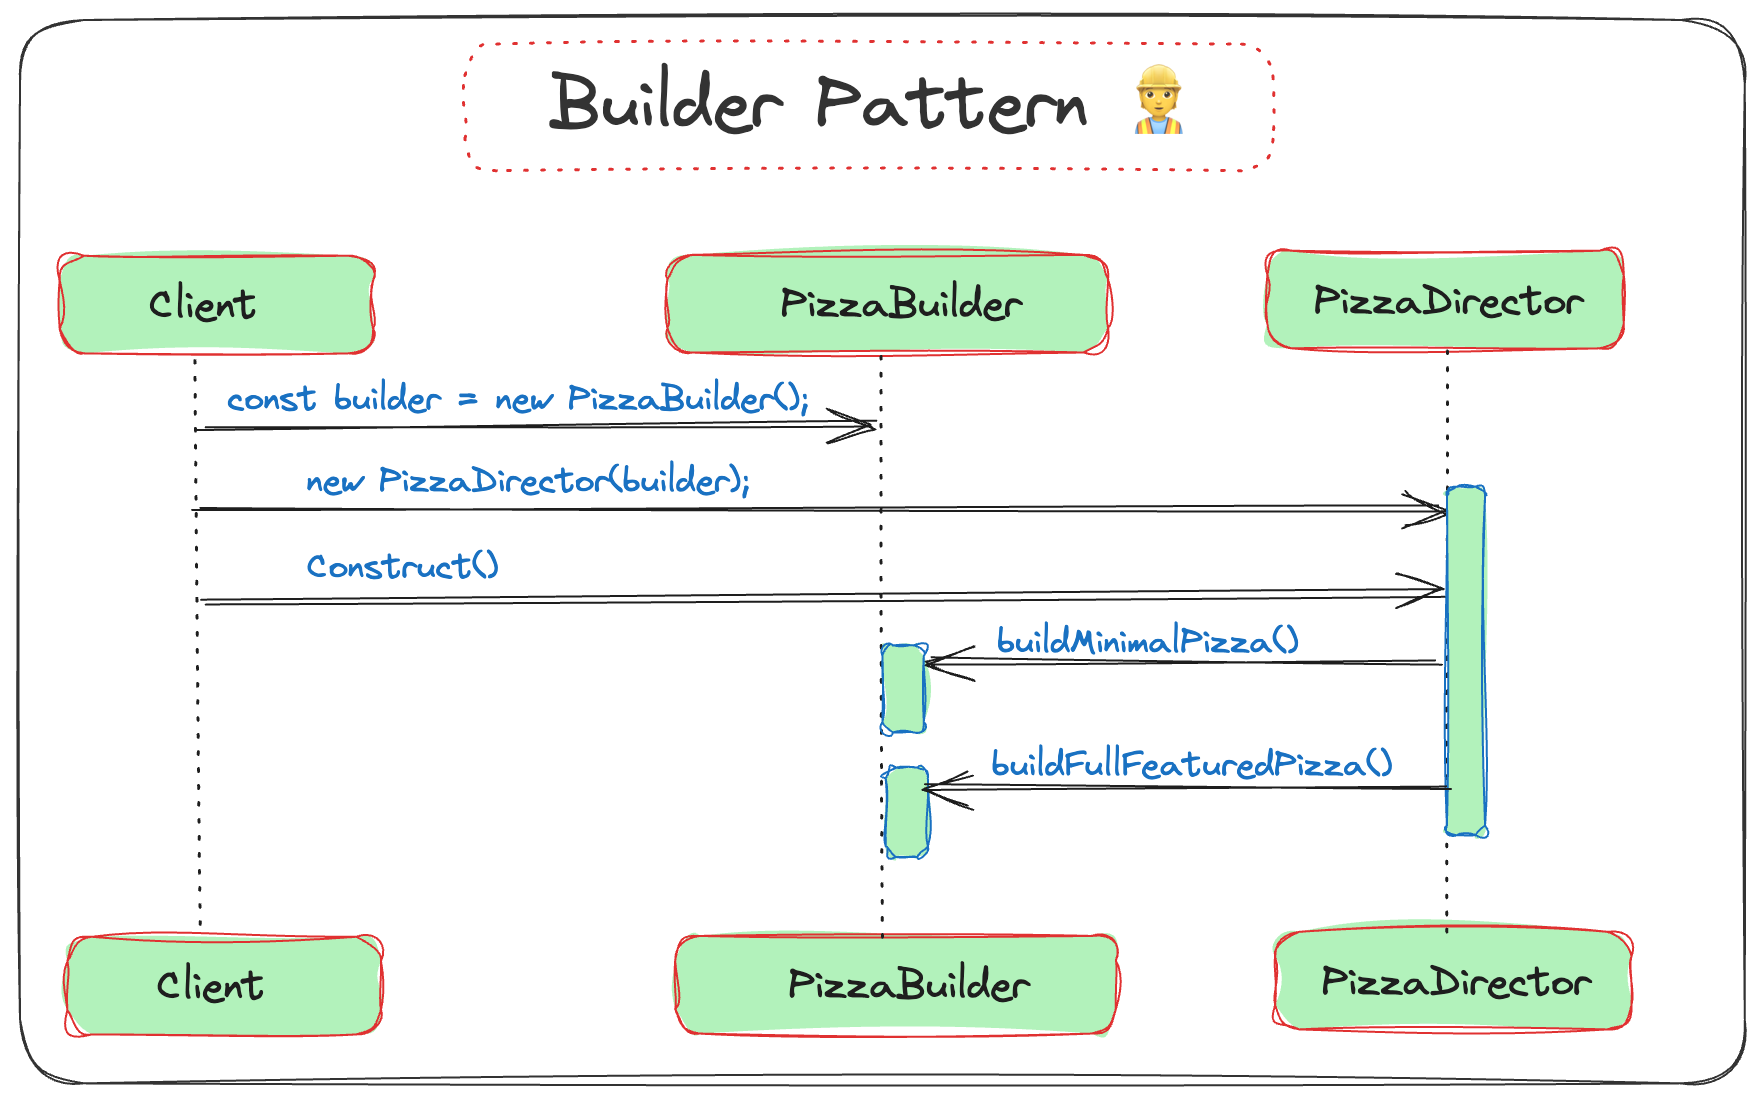 Builder Design Pattern